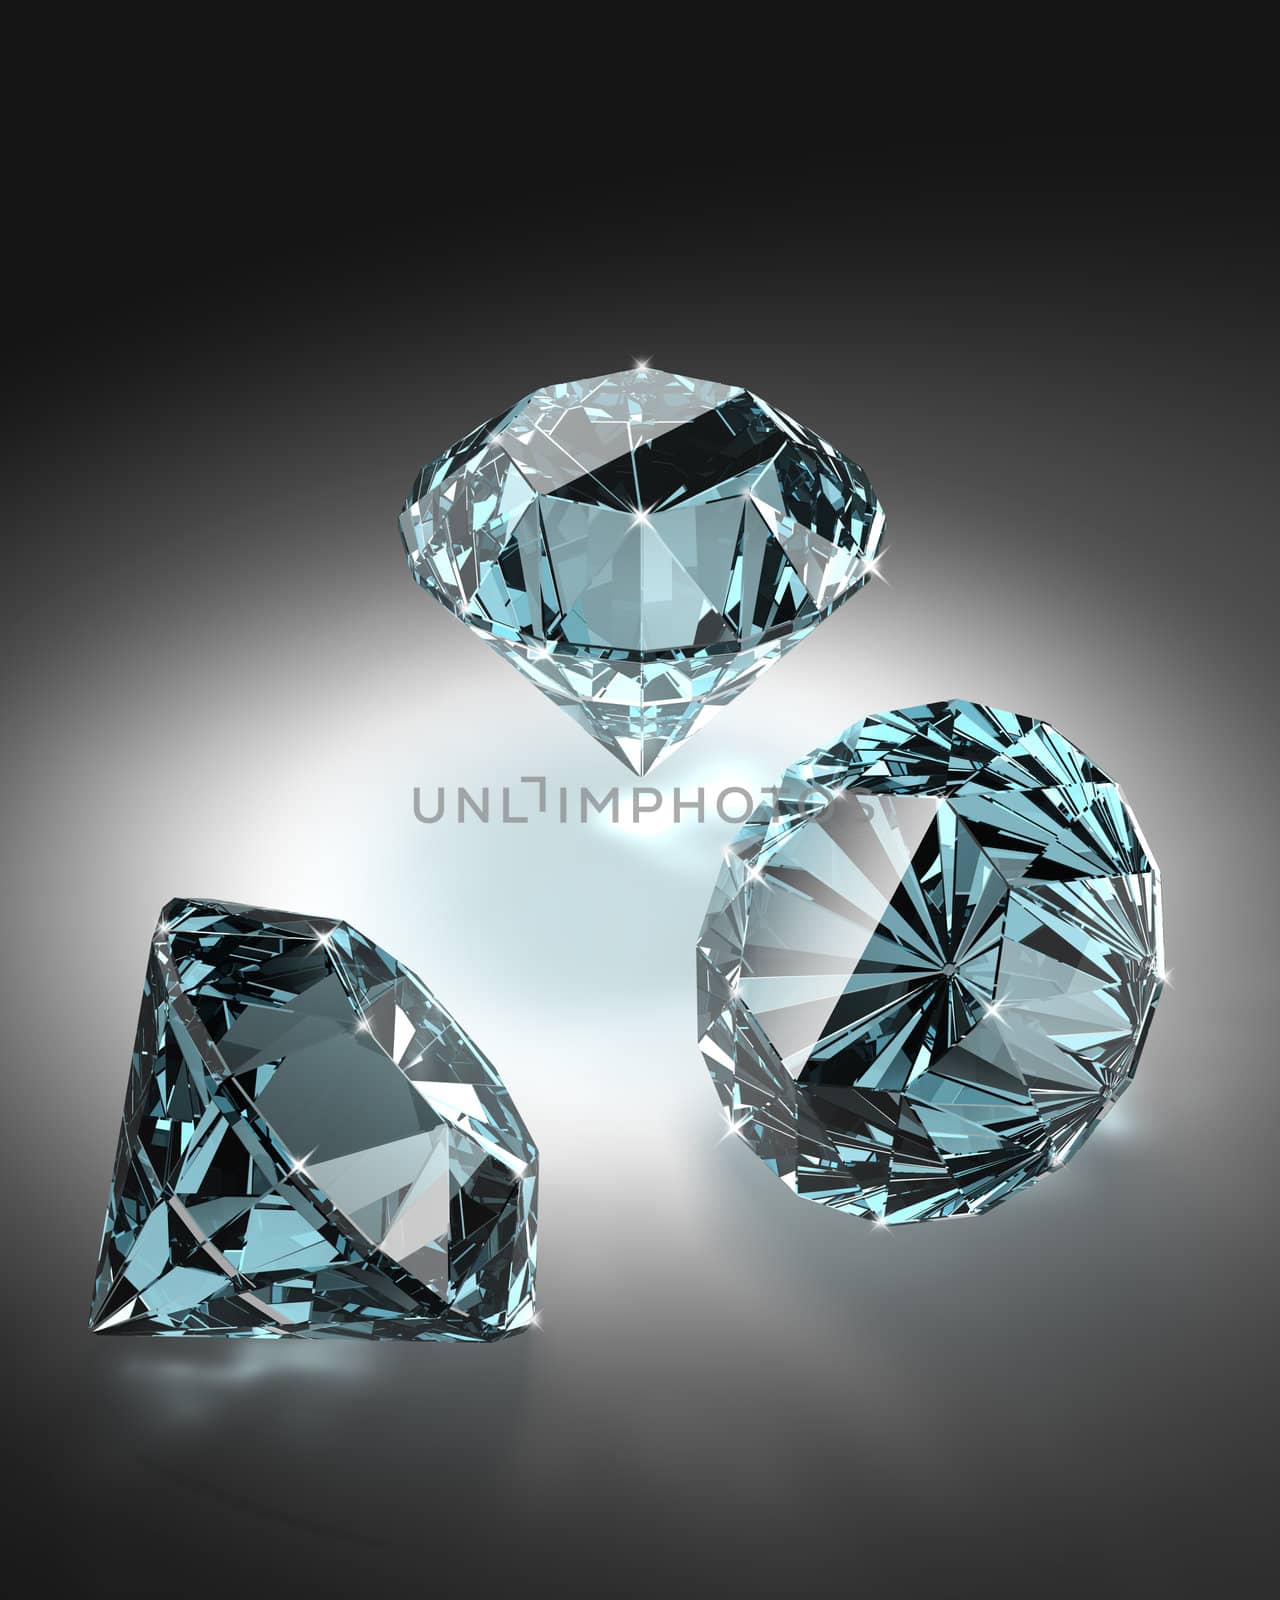 Bright diamonds group on dark background - 3d render image.